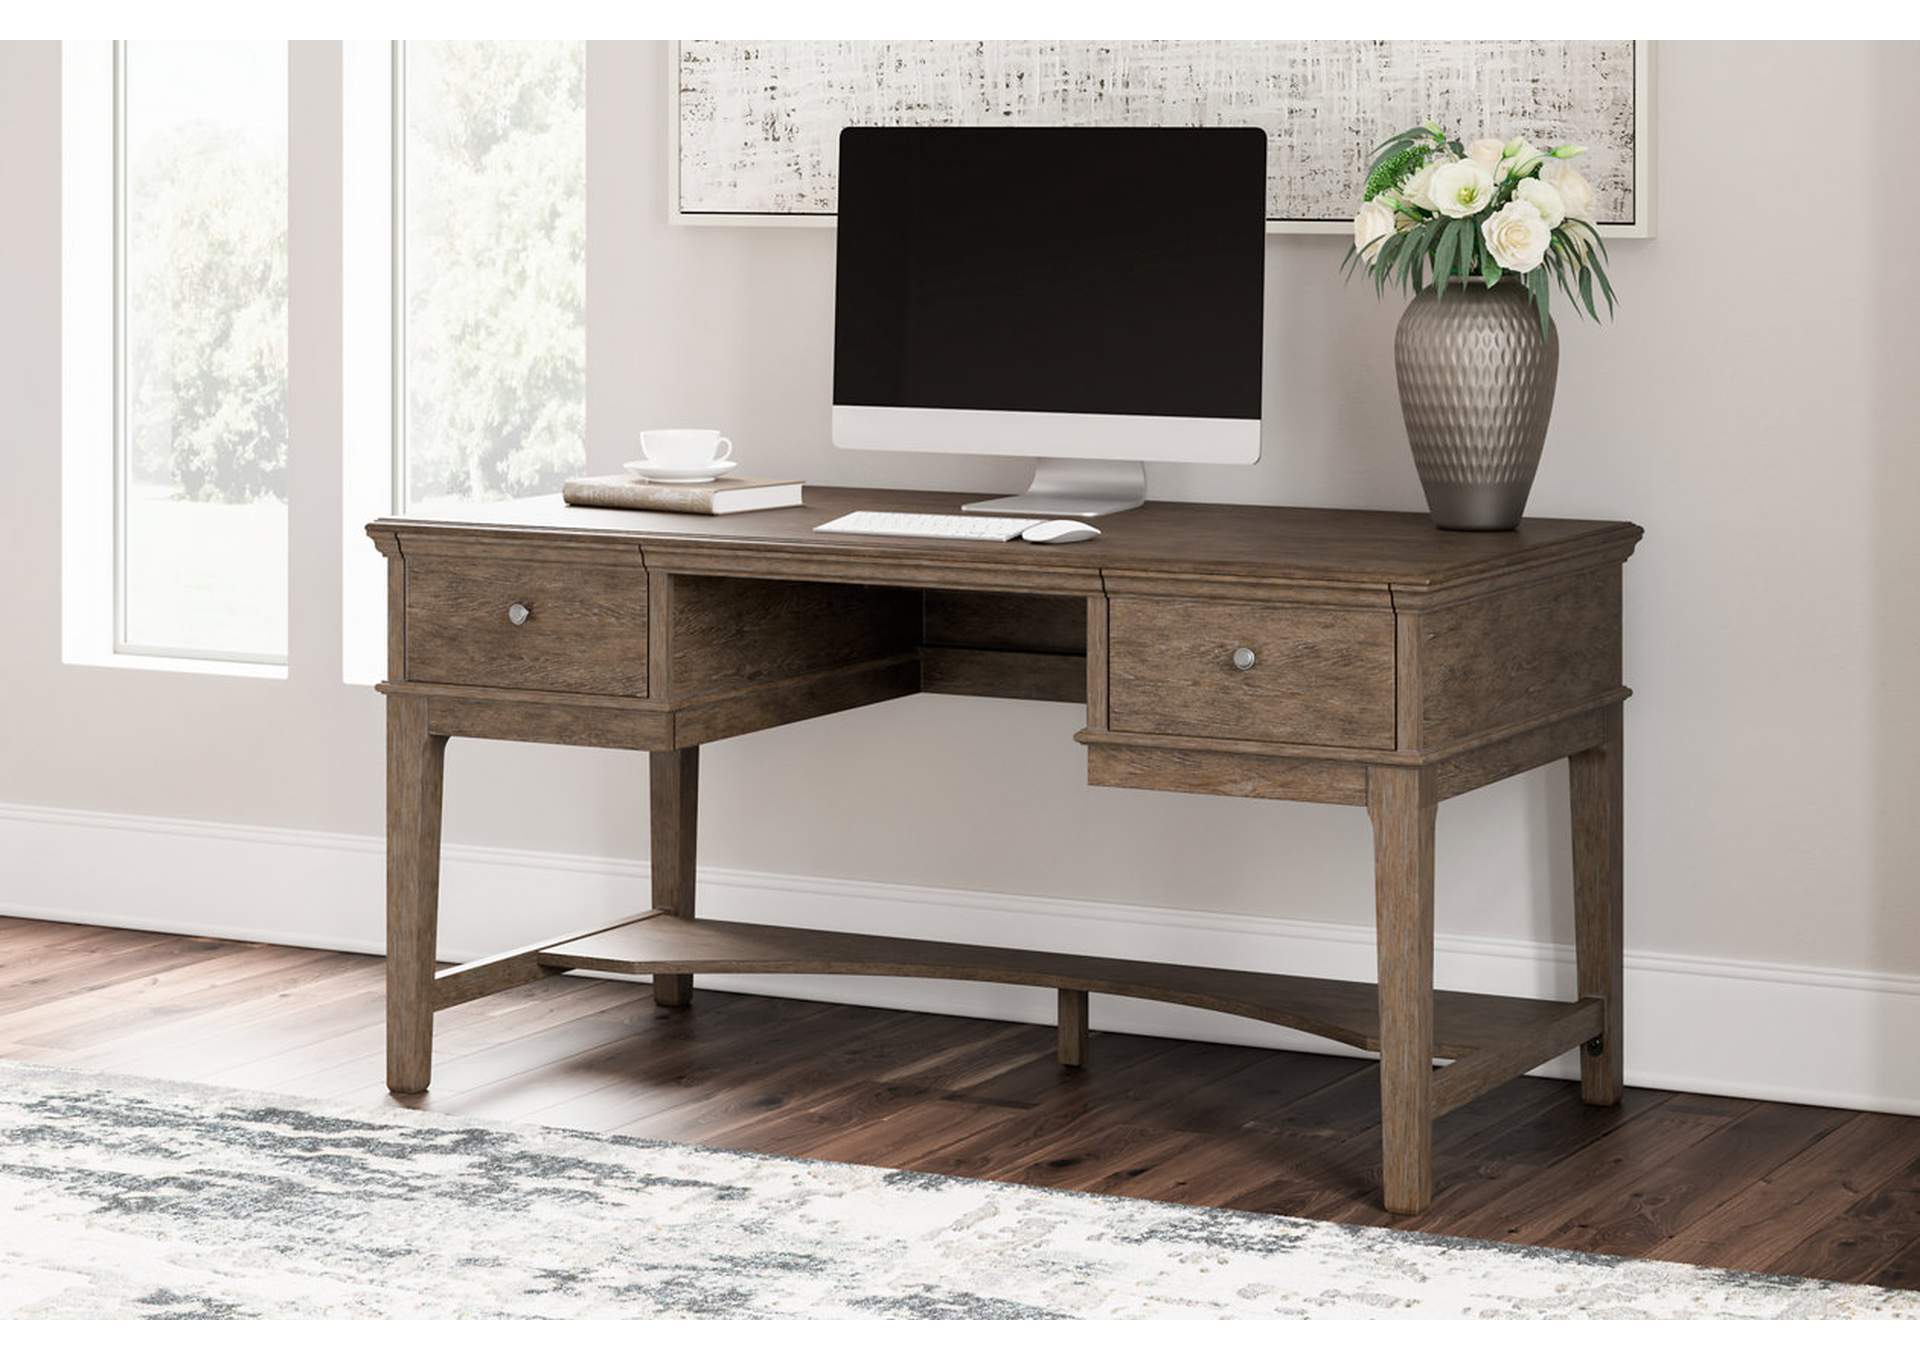 Janismore Home Office Storage Leg Desk,Signature Design By Ashley